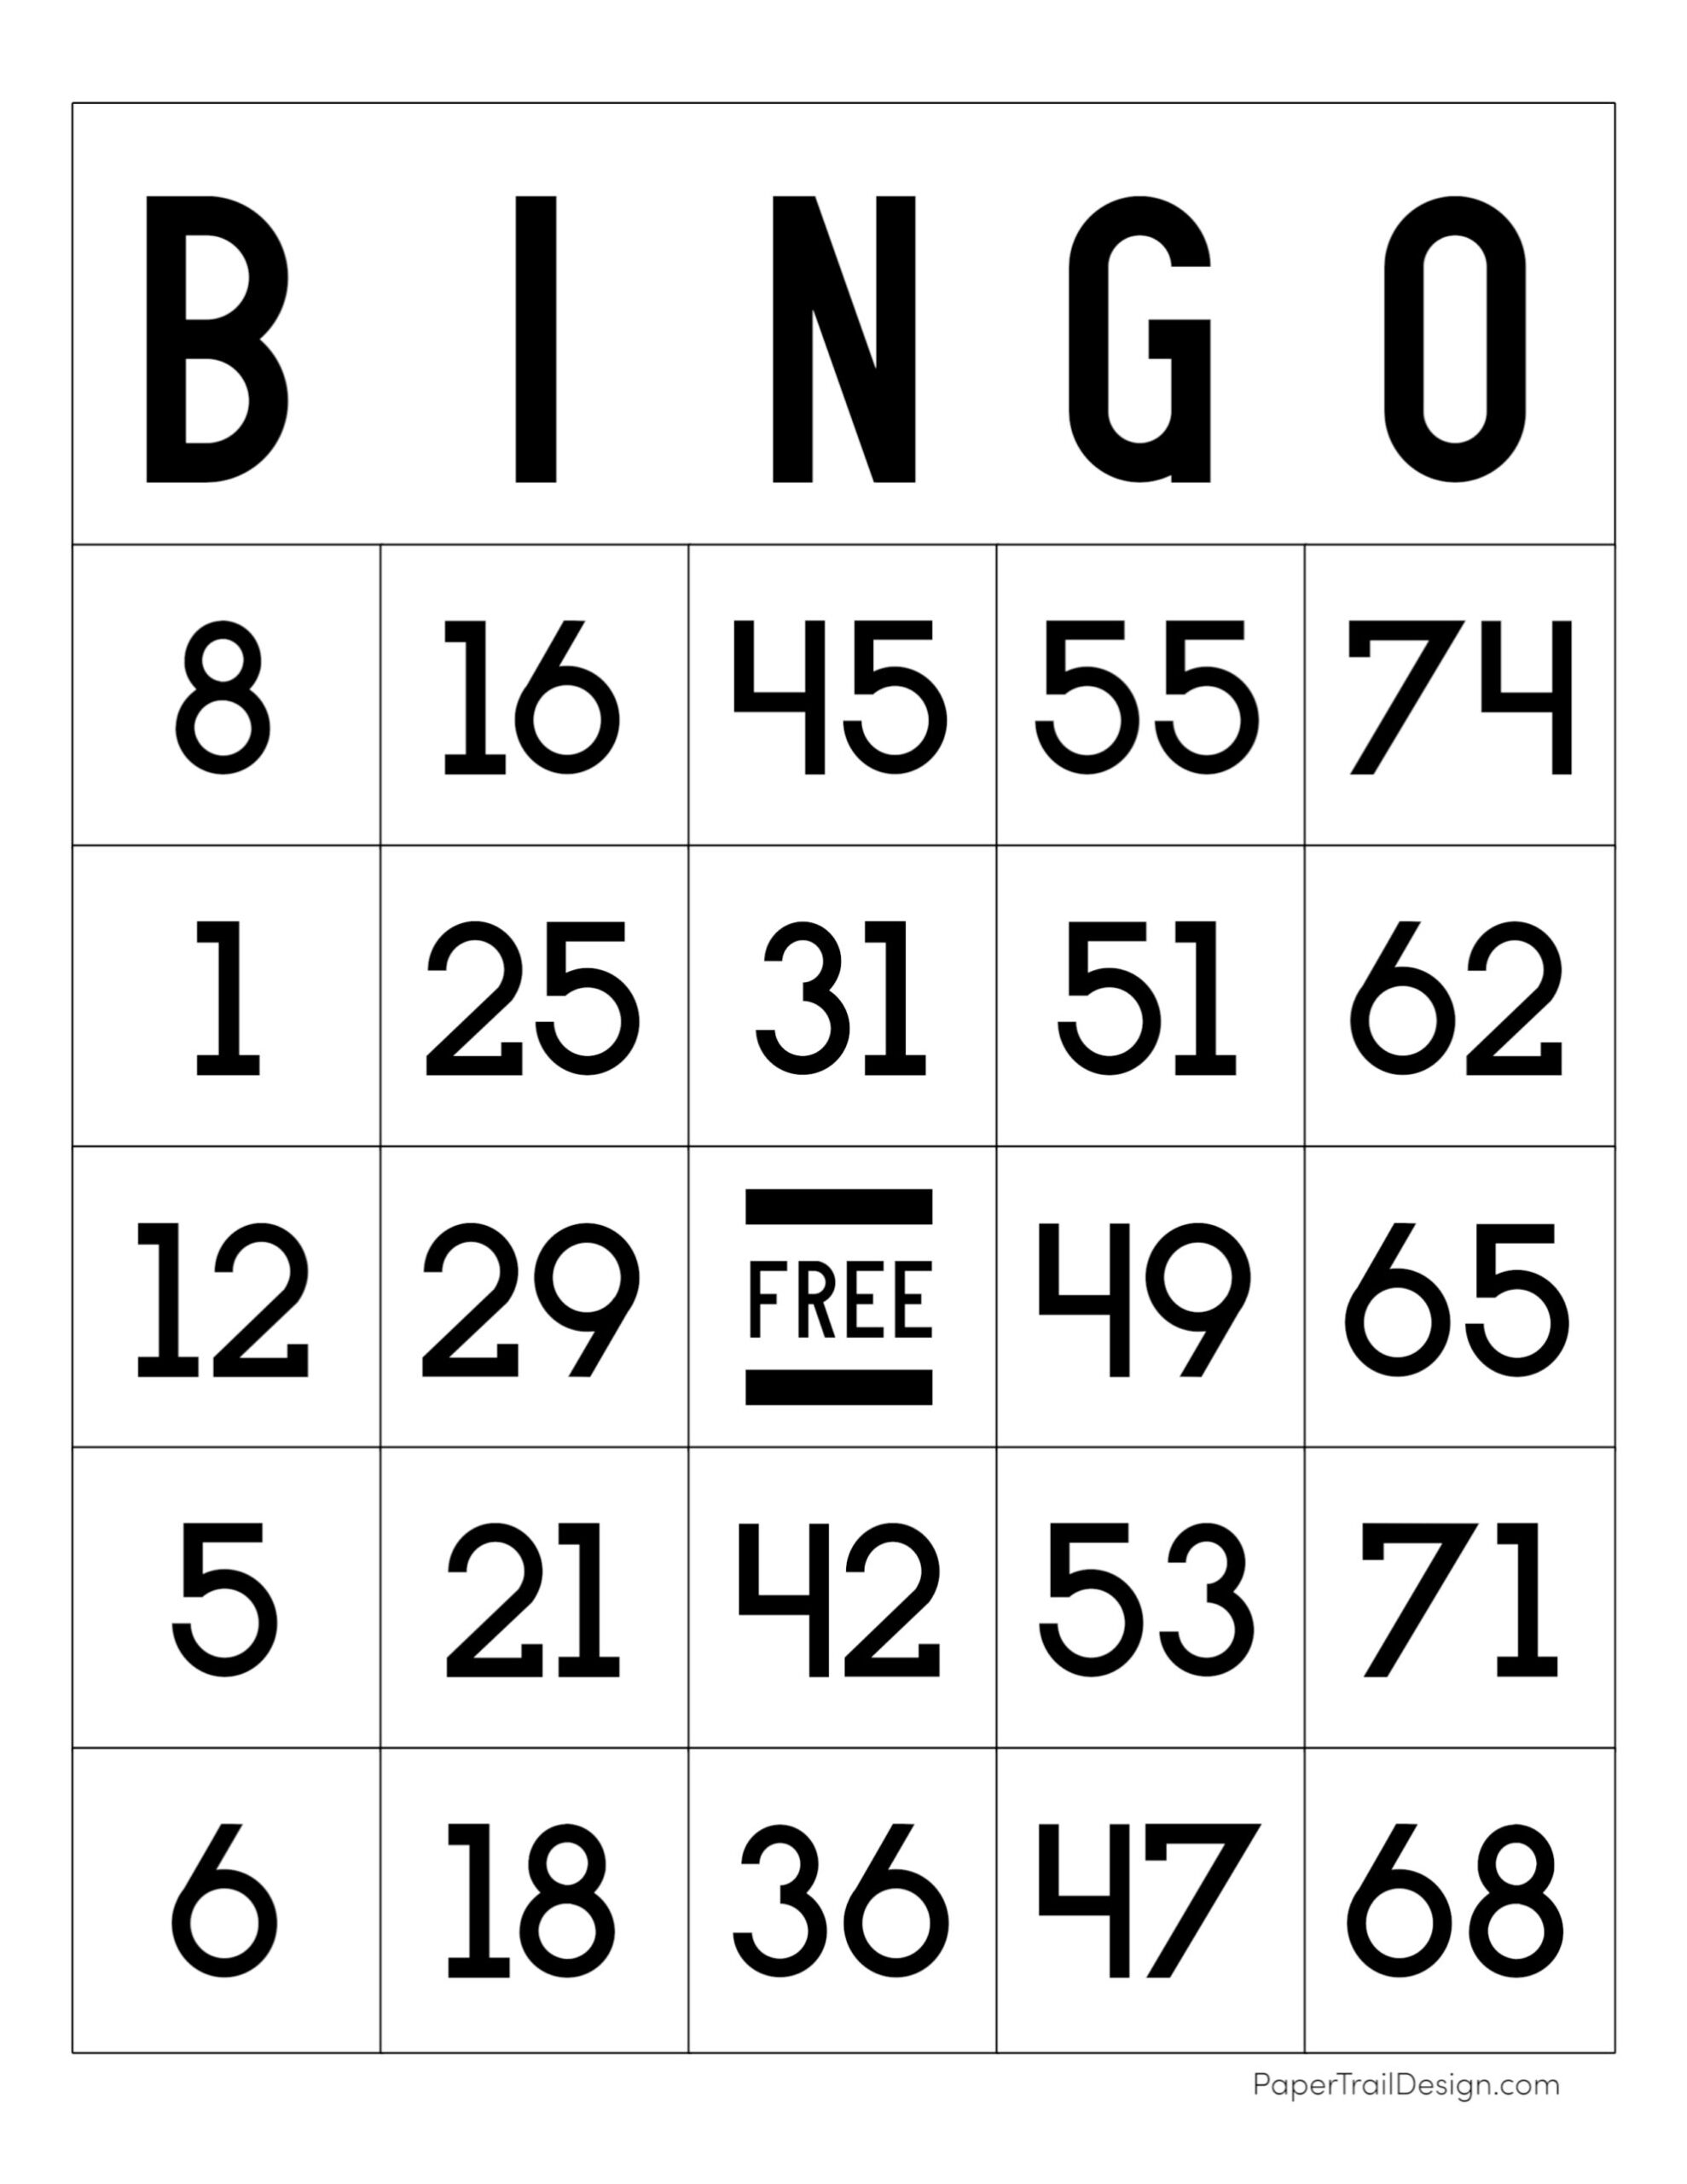 Free Printable Bingo Cards - Paper Trail Design - Free Printable Bingo Sheets